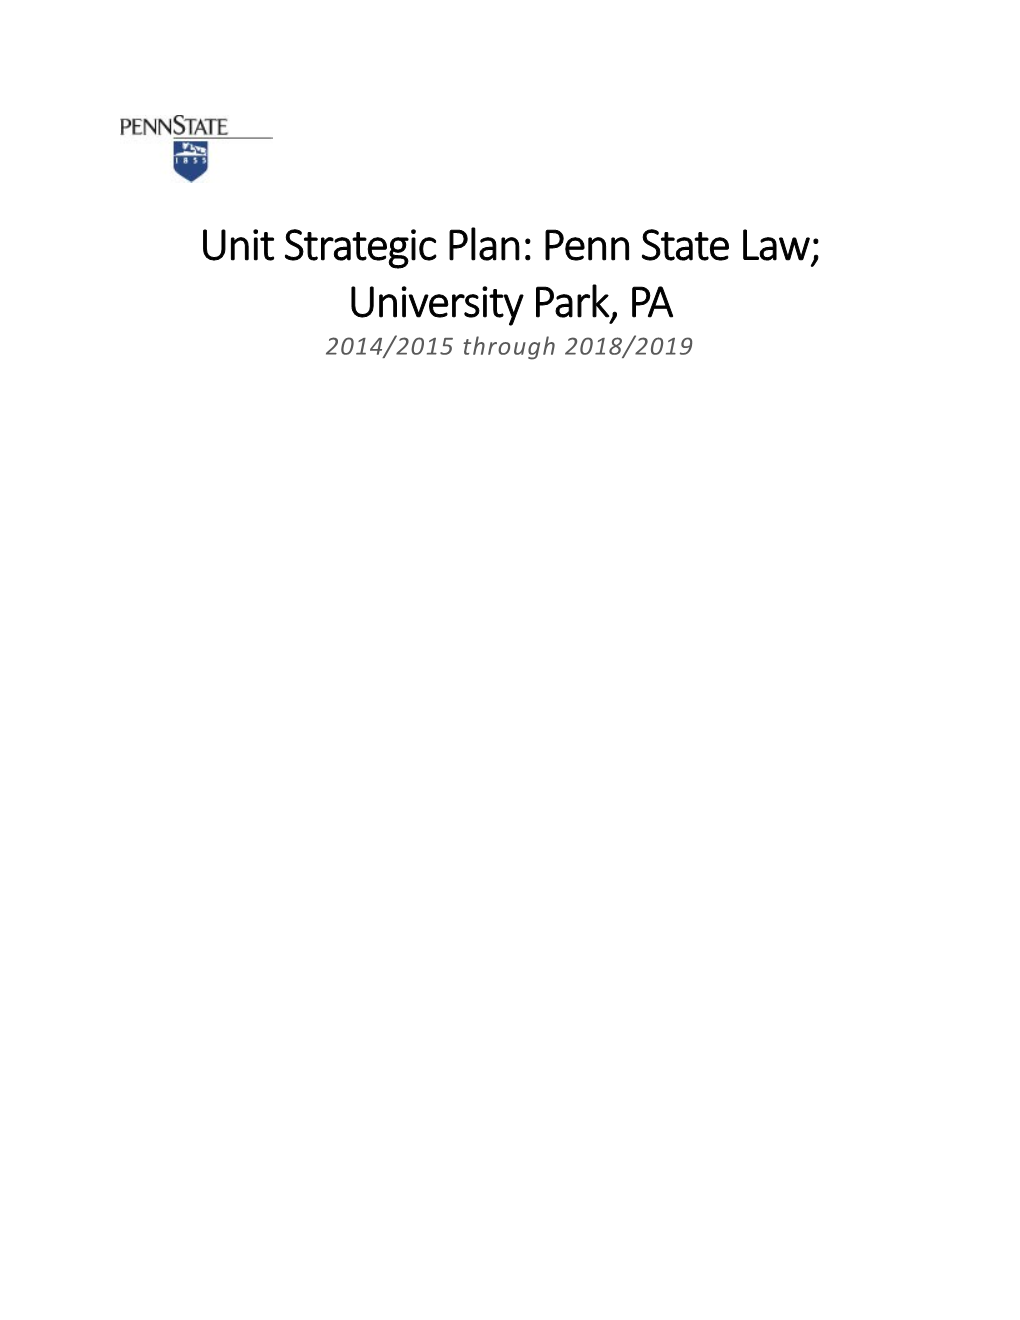 Penn State Law University Park Strategic Plan